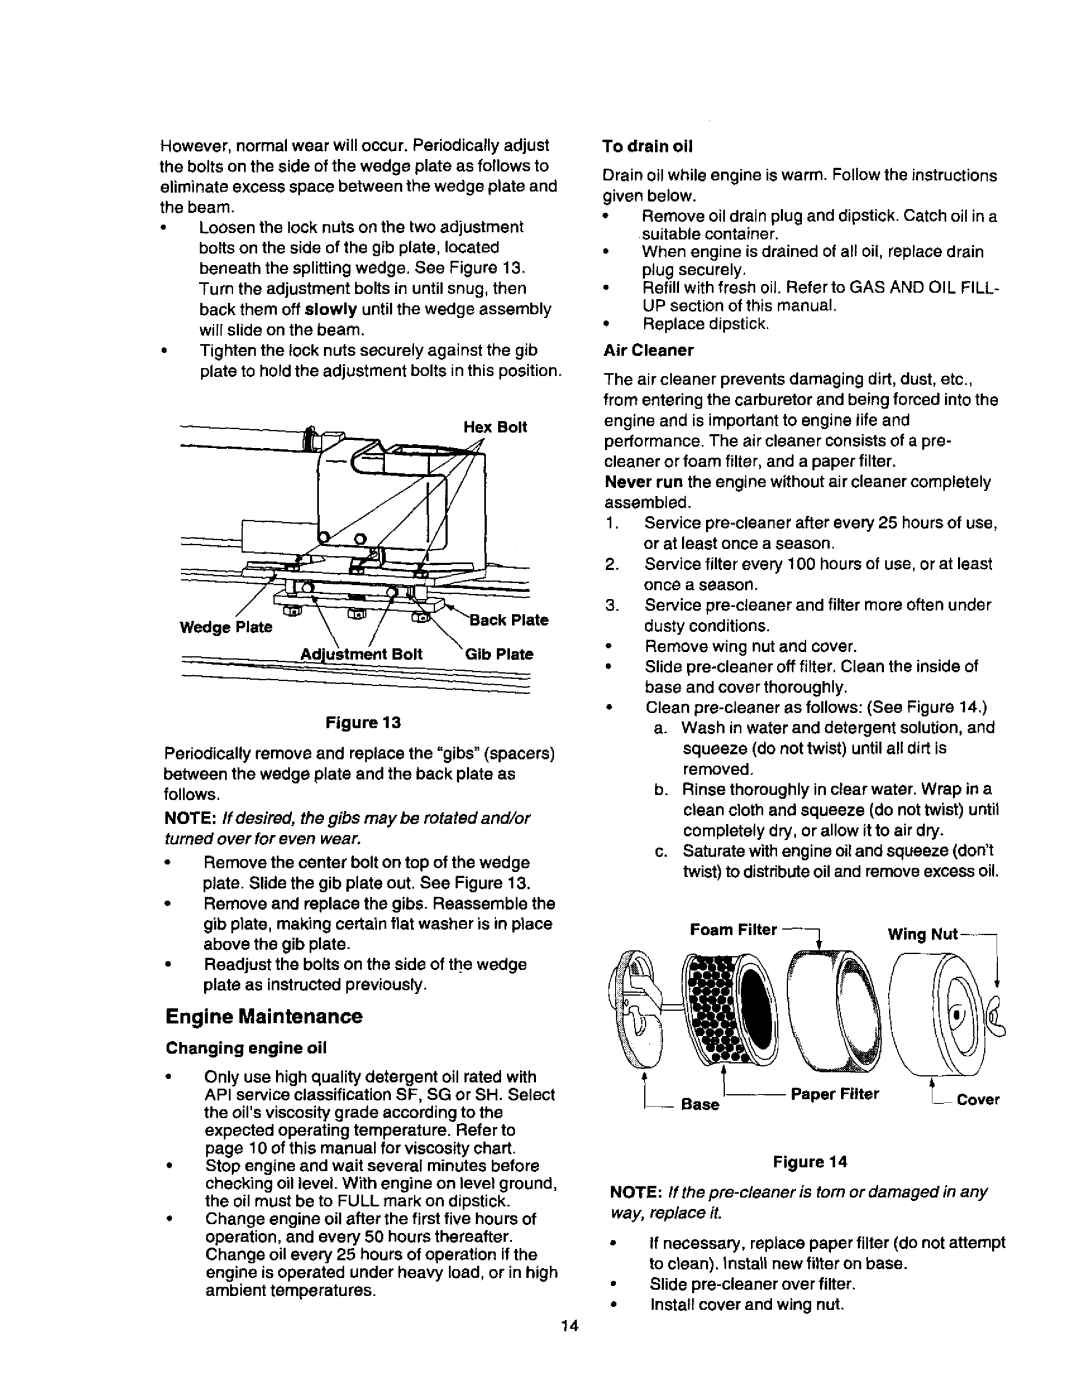 Craftsman 247.79452 owner manual Engine Maintenance 